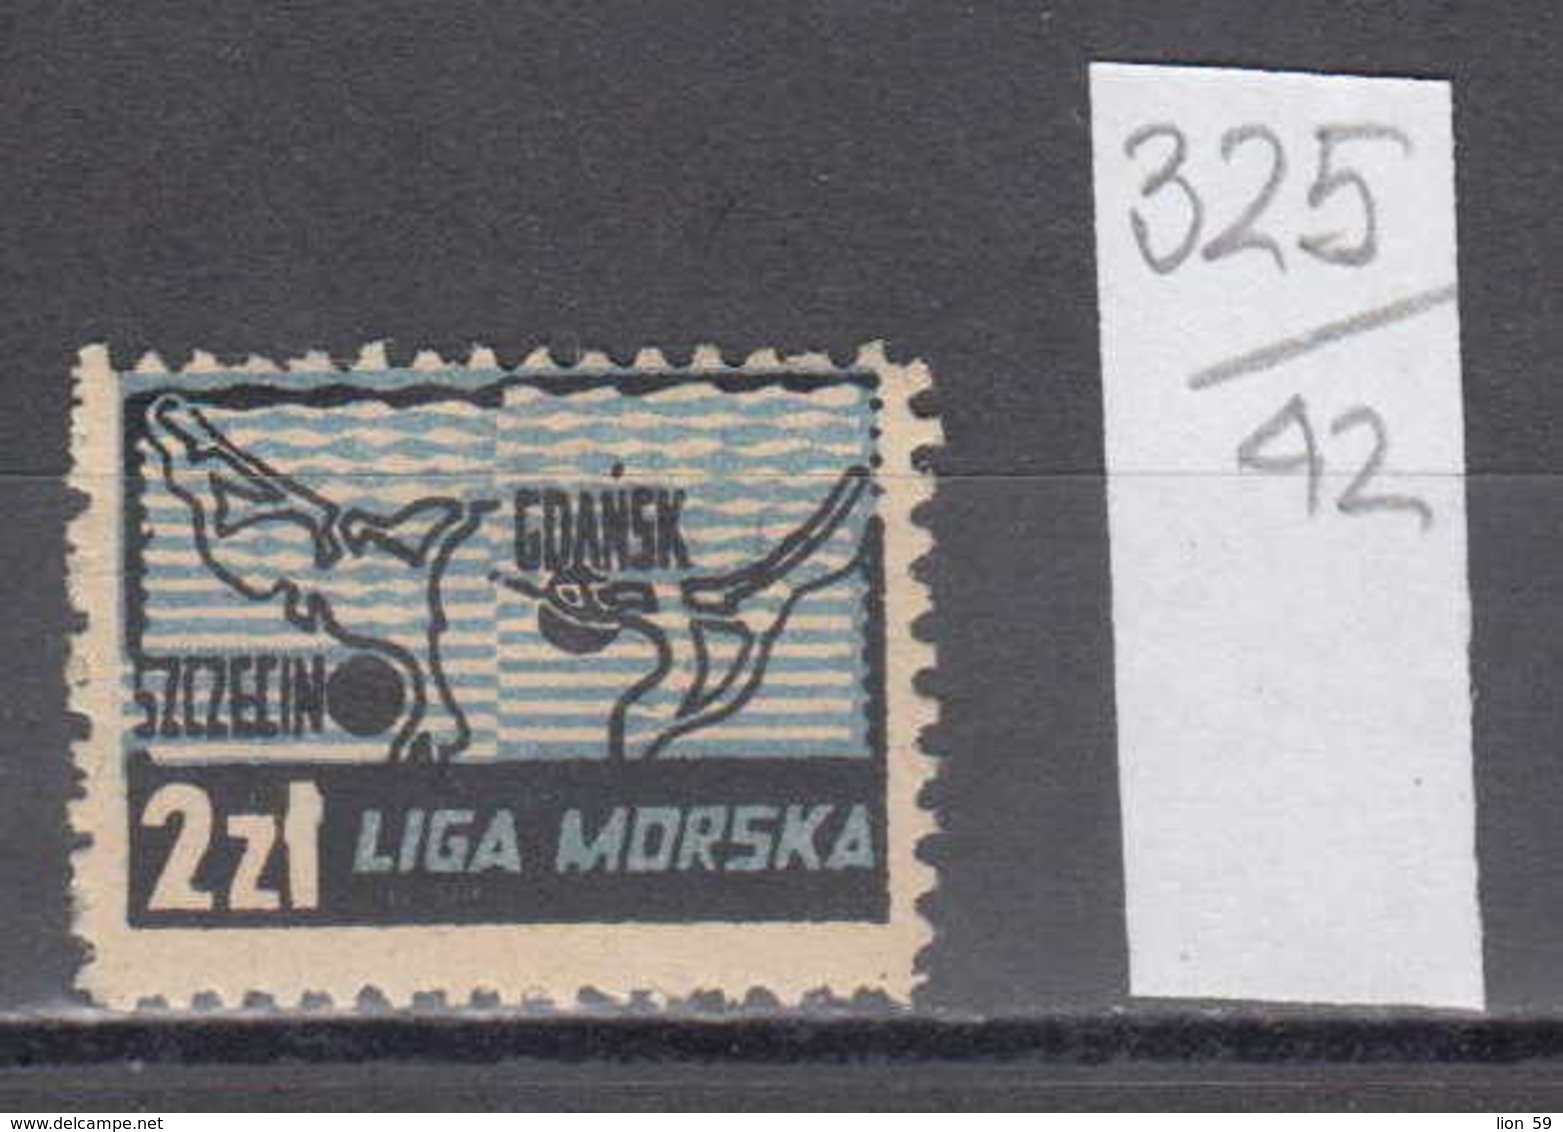 42K325 / 2 Zl. - LIGA MORSKA / Sea League /  SZCZECIN - GDANSK , Revenue Fiscaux Steuermarken Fiscal , Poland Pologne - Fiscaux